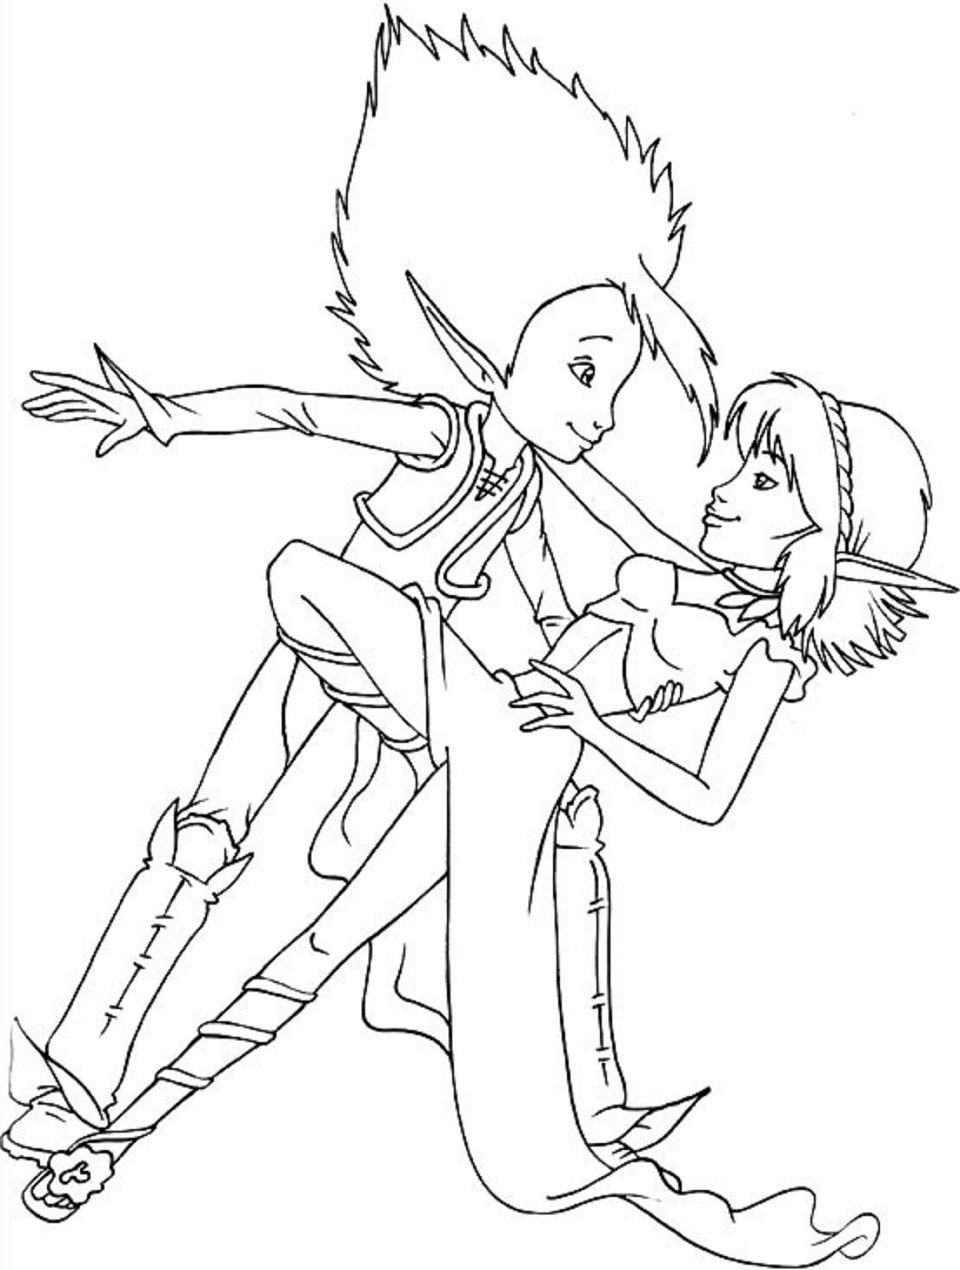 Arthur And Selenia Dancing Coloring Page - Free Printable Coloring